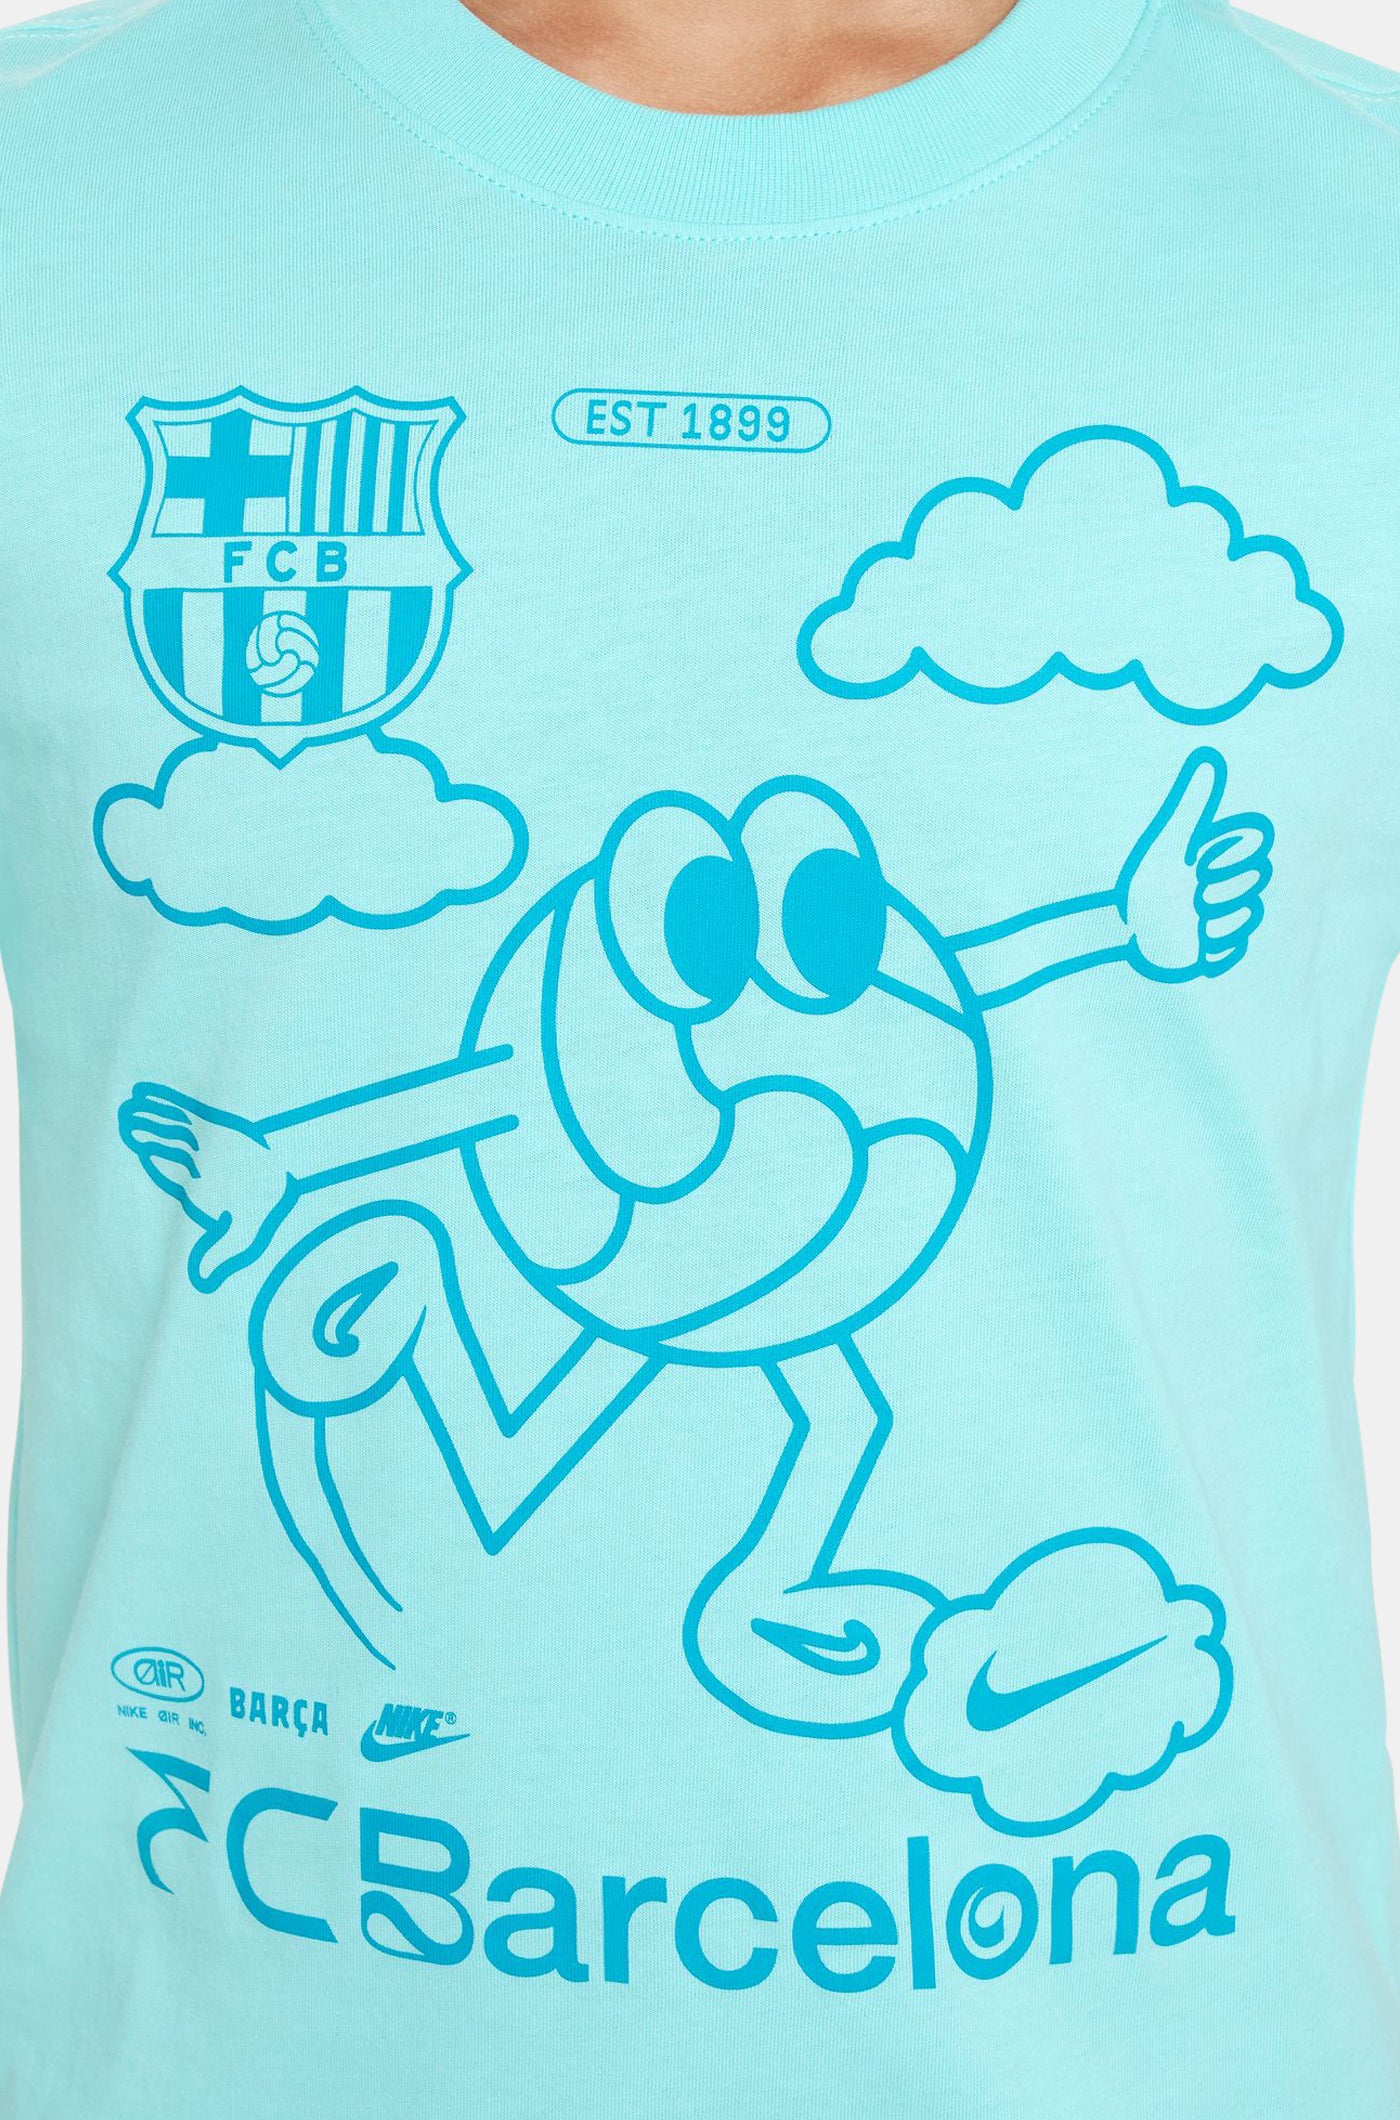 FC Barcelona Nike Air Tee - Nen/a